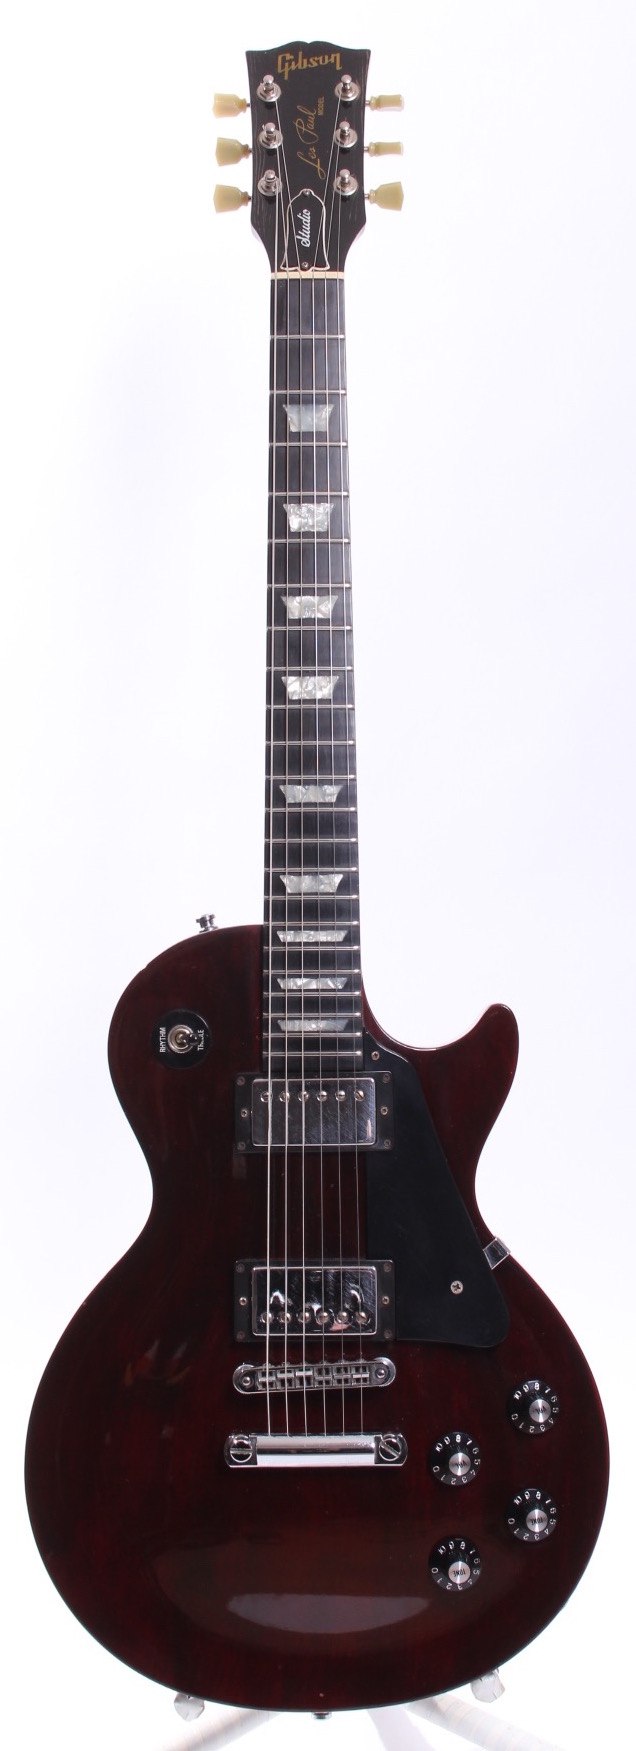 Gibson Les Paul Studio 1993 Wine Red Guitar For Sale Yeahman's Guitars